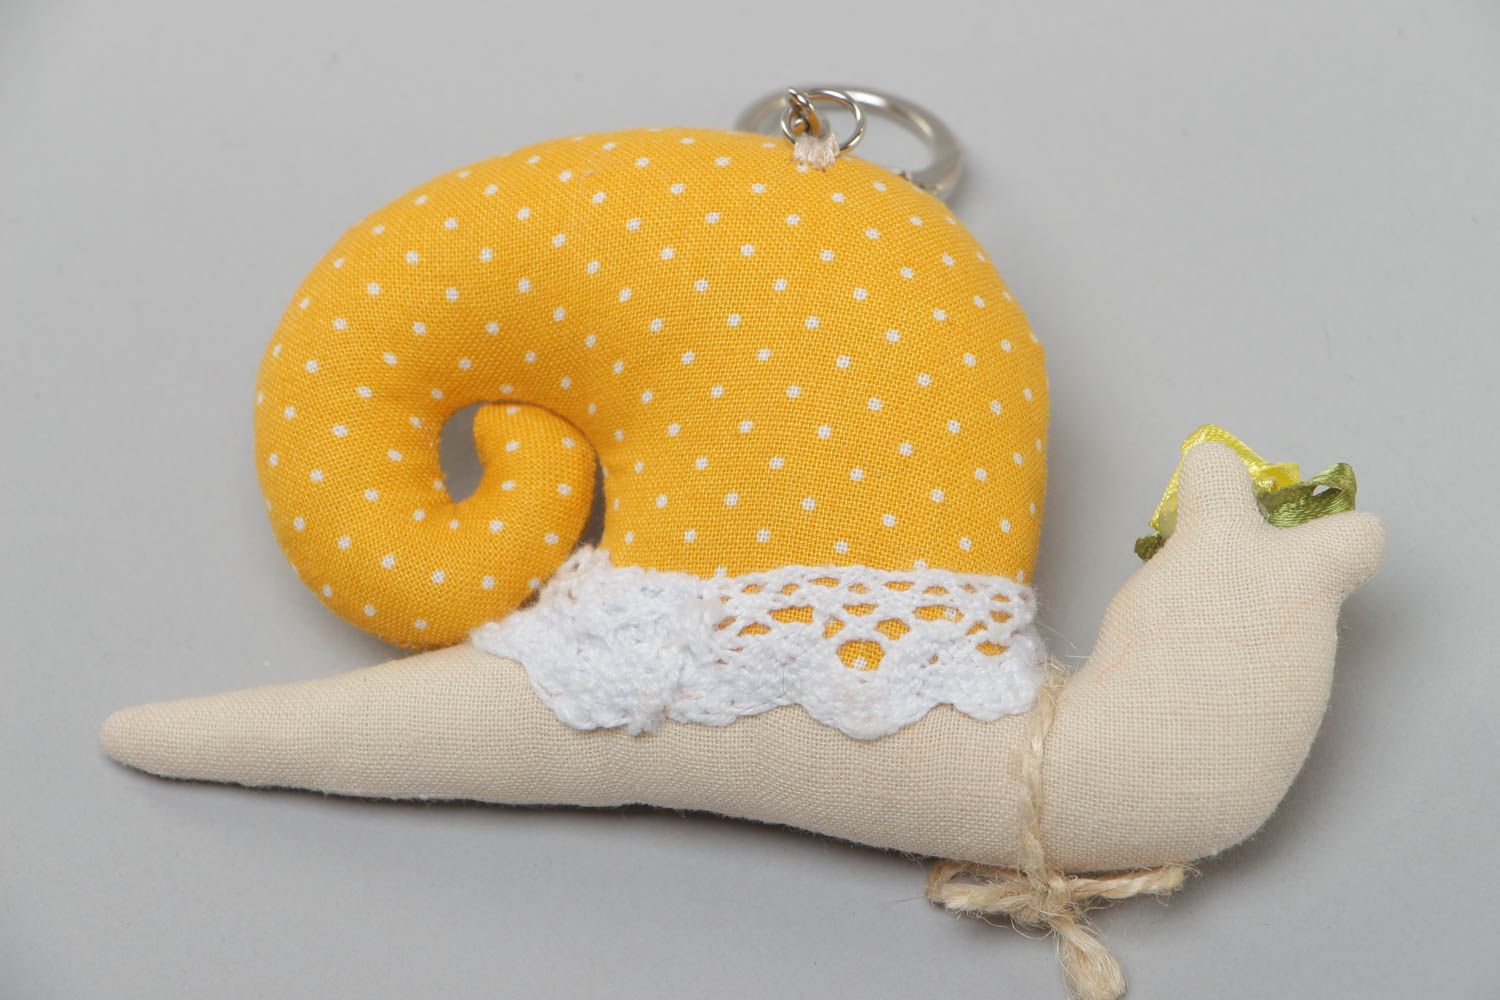 Handmade yellow cotton fabric soft keychain toy or bag charm photo 4